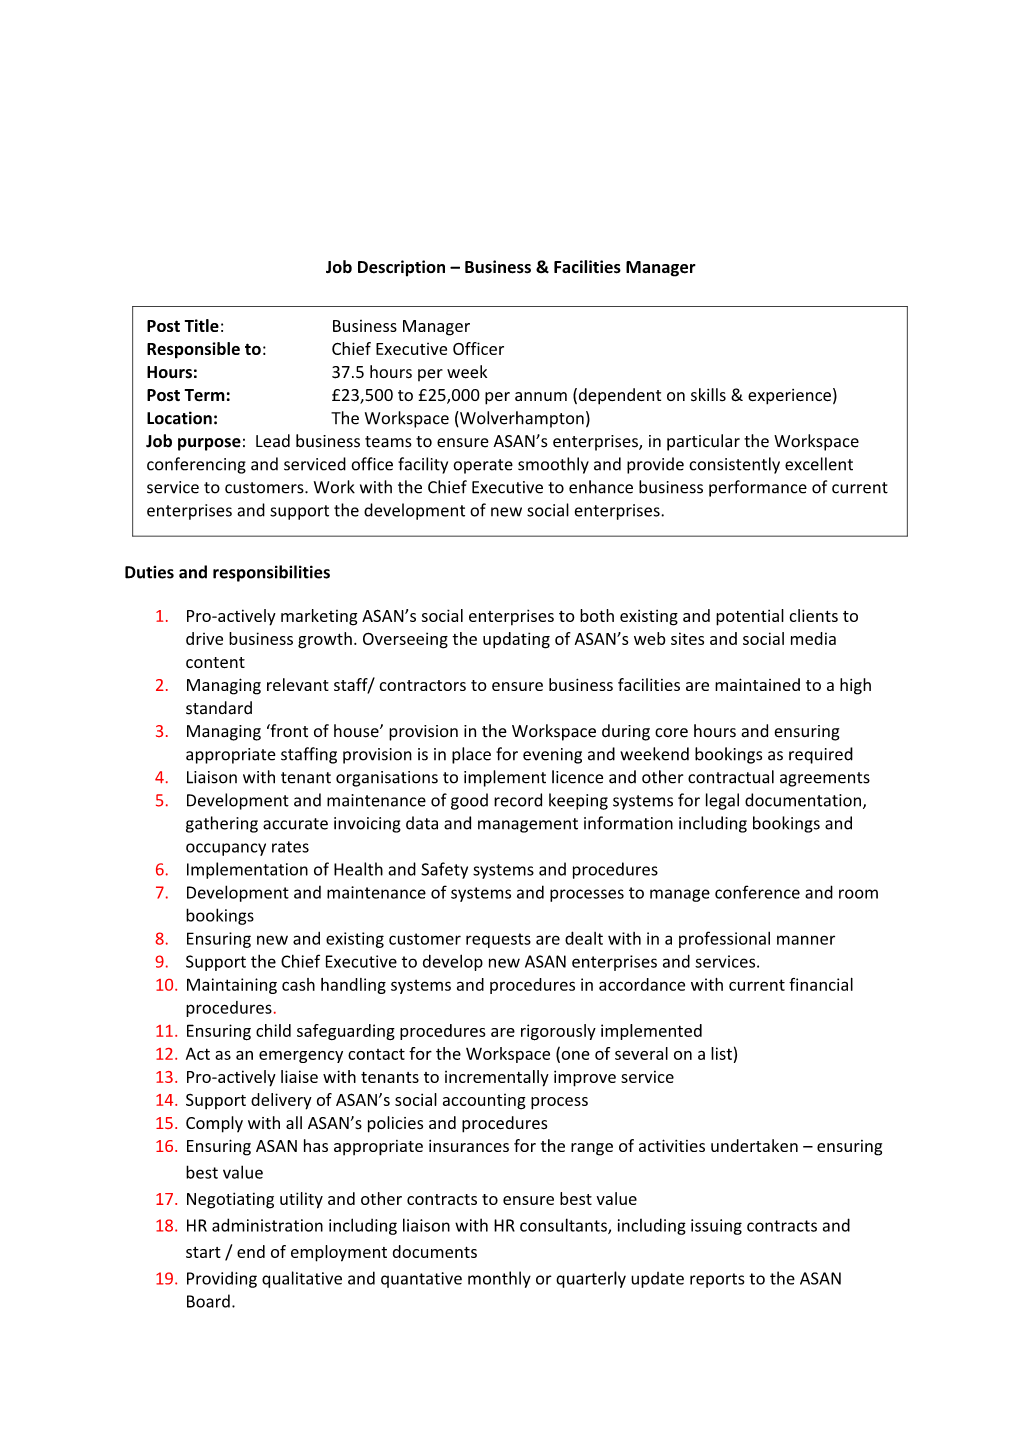 Job Description Businessfacilities Manager